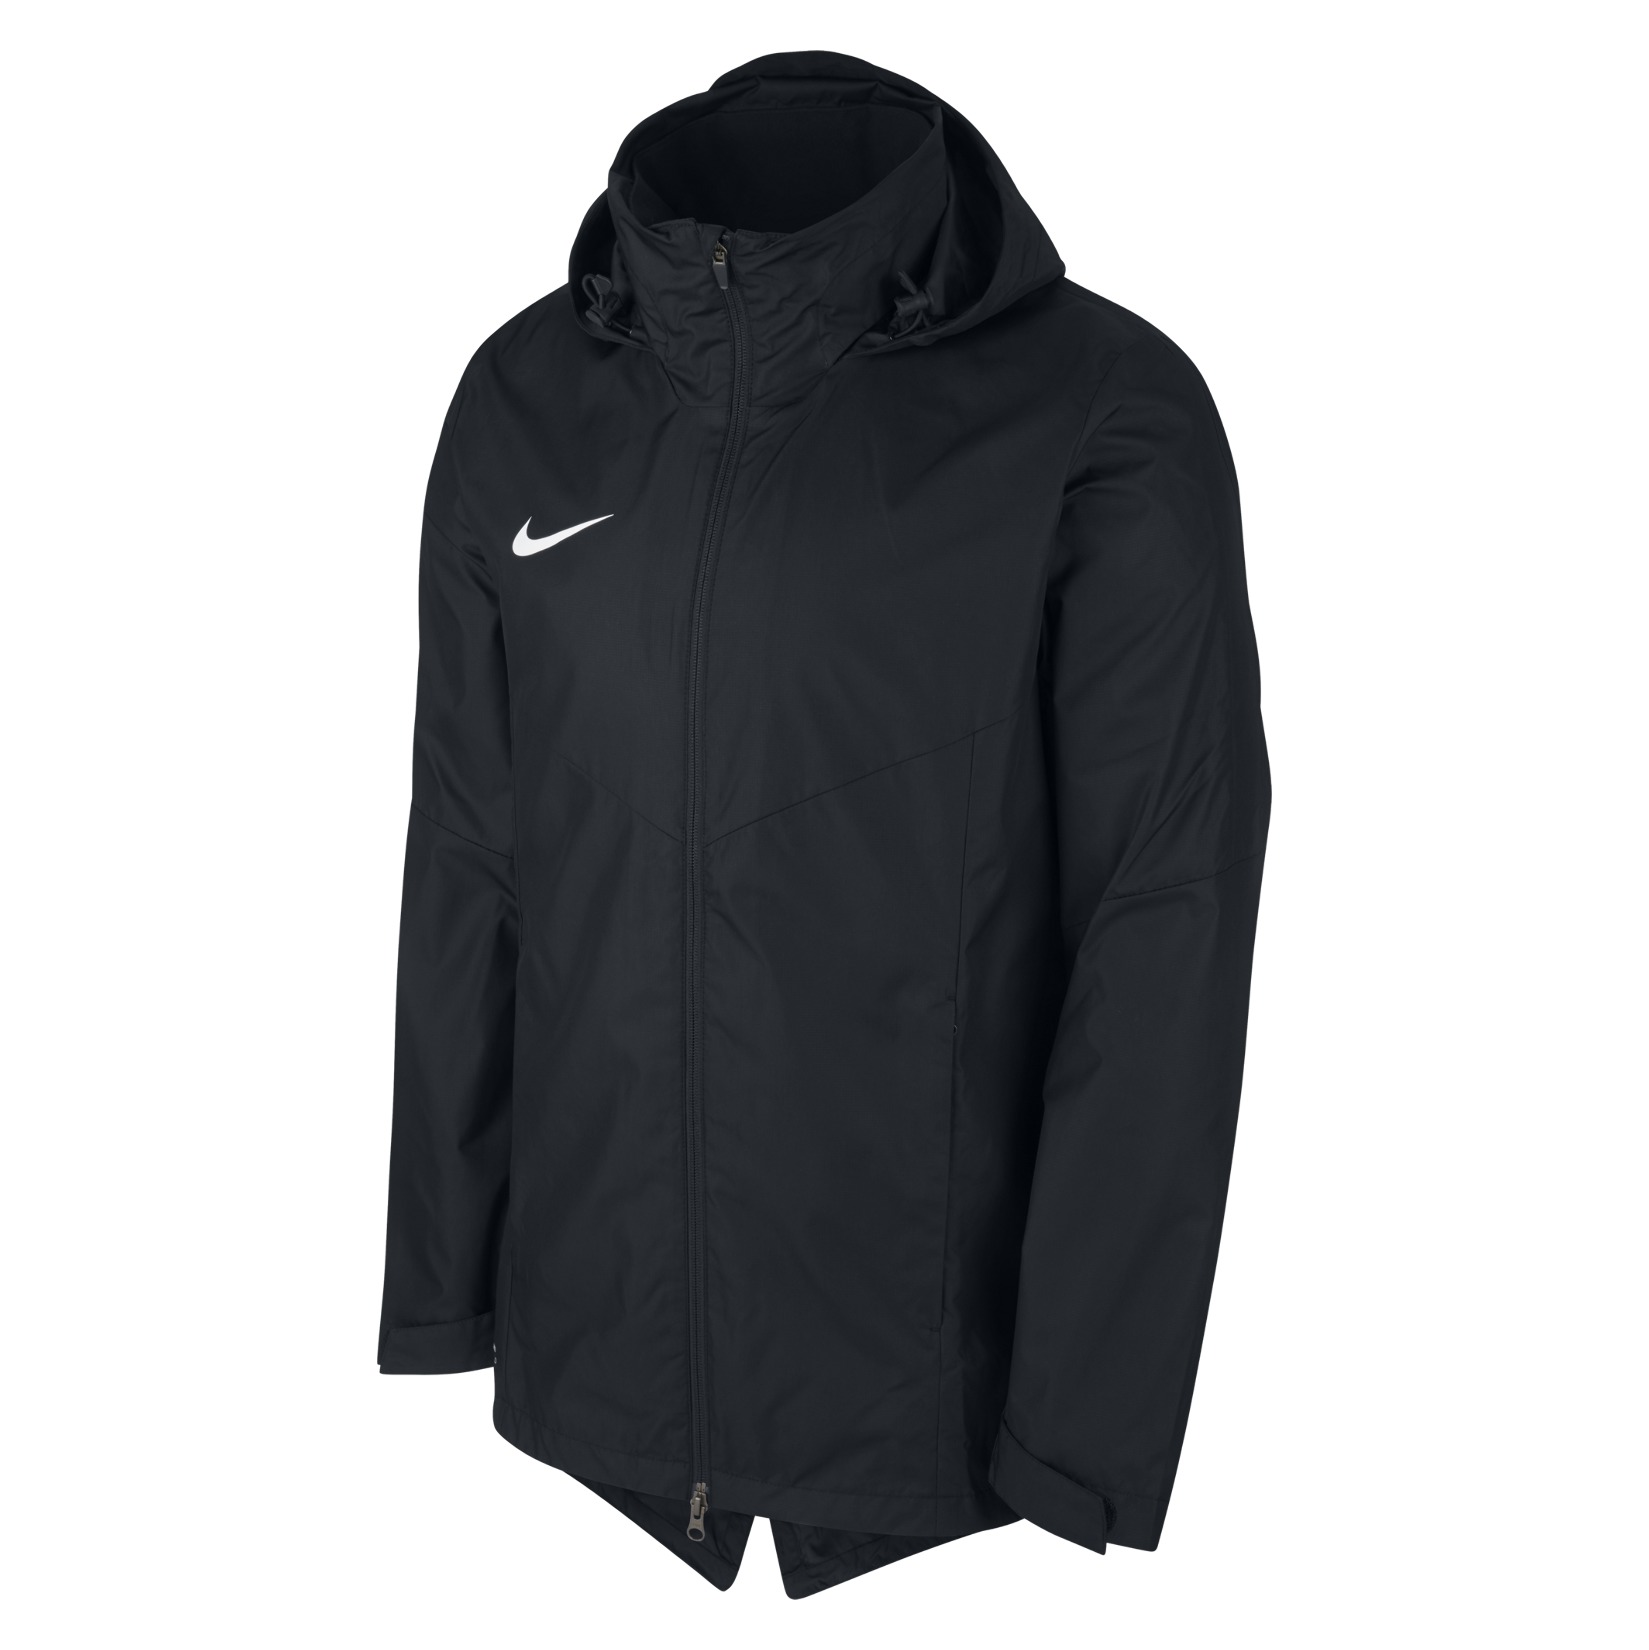 Nike Academy Rain Jacket